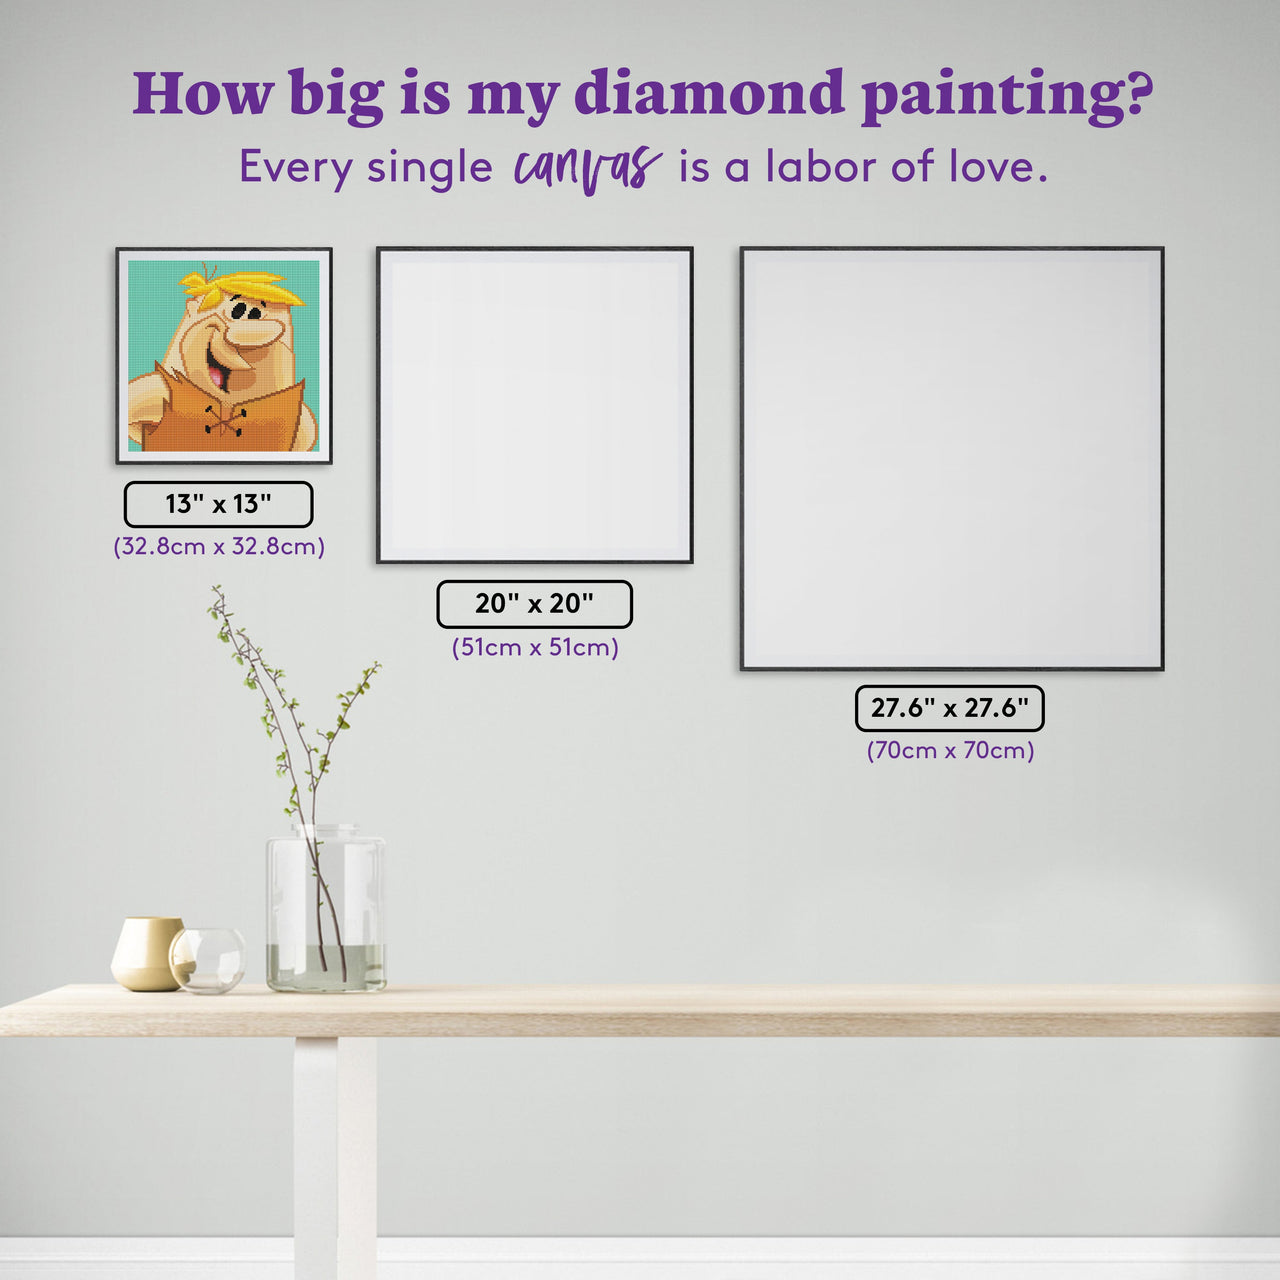 Diamond Painting Barney Rubble 13" x 13" (32.8cm x 32.8cm) / Round With 23 Colors including 1 AB Diamonds and 1 Fairy Dust Diamonds / 13689